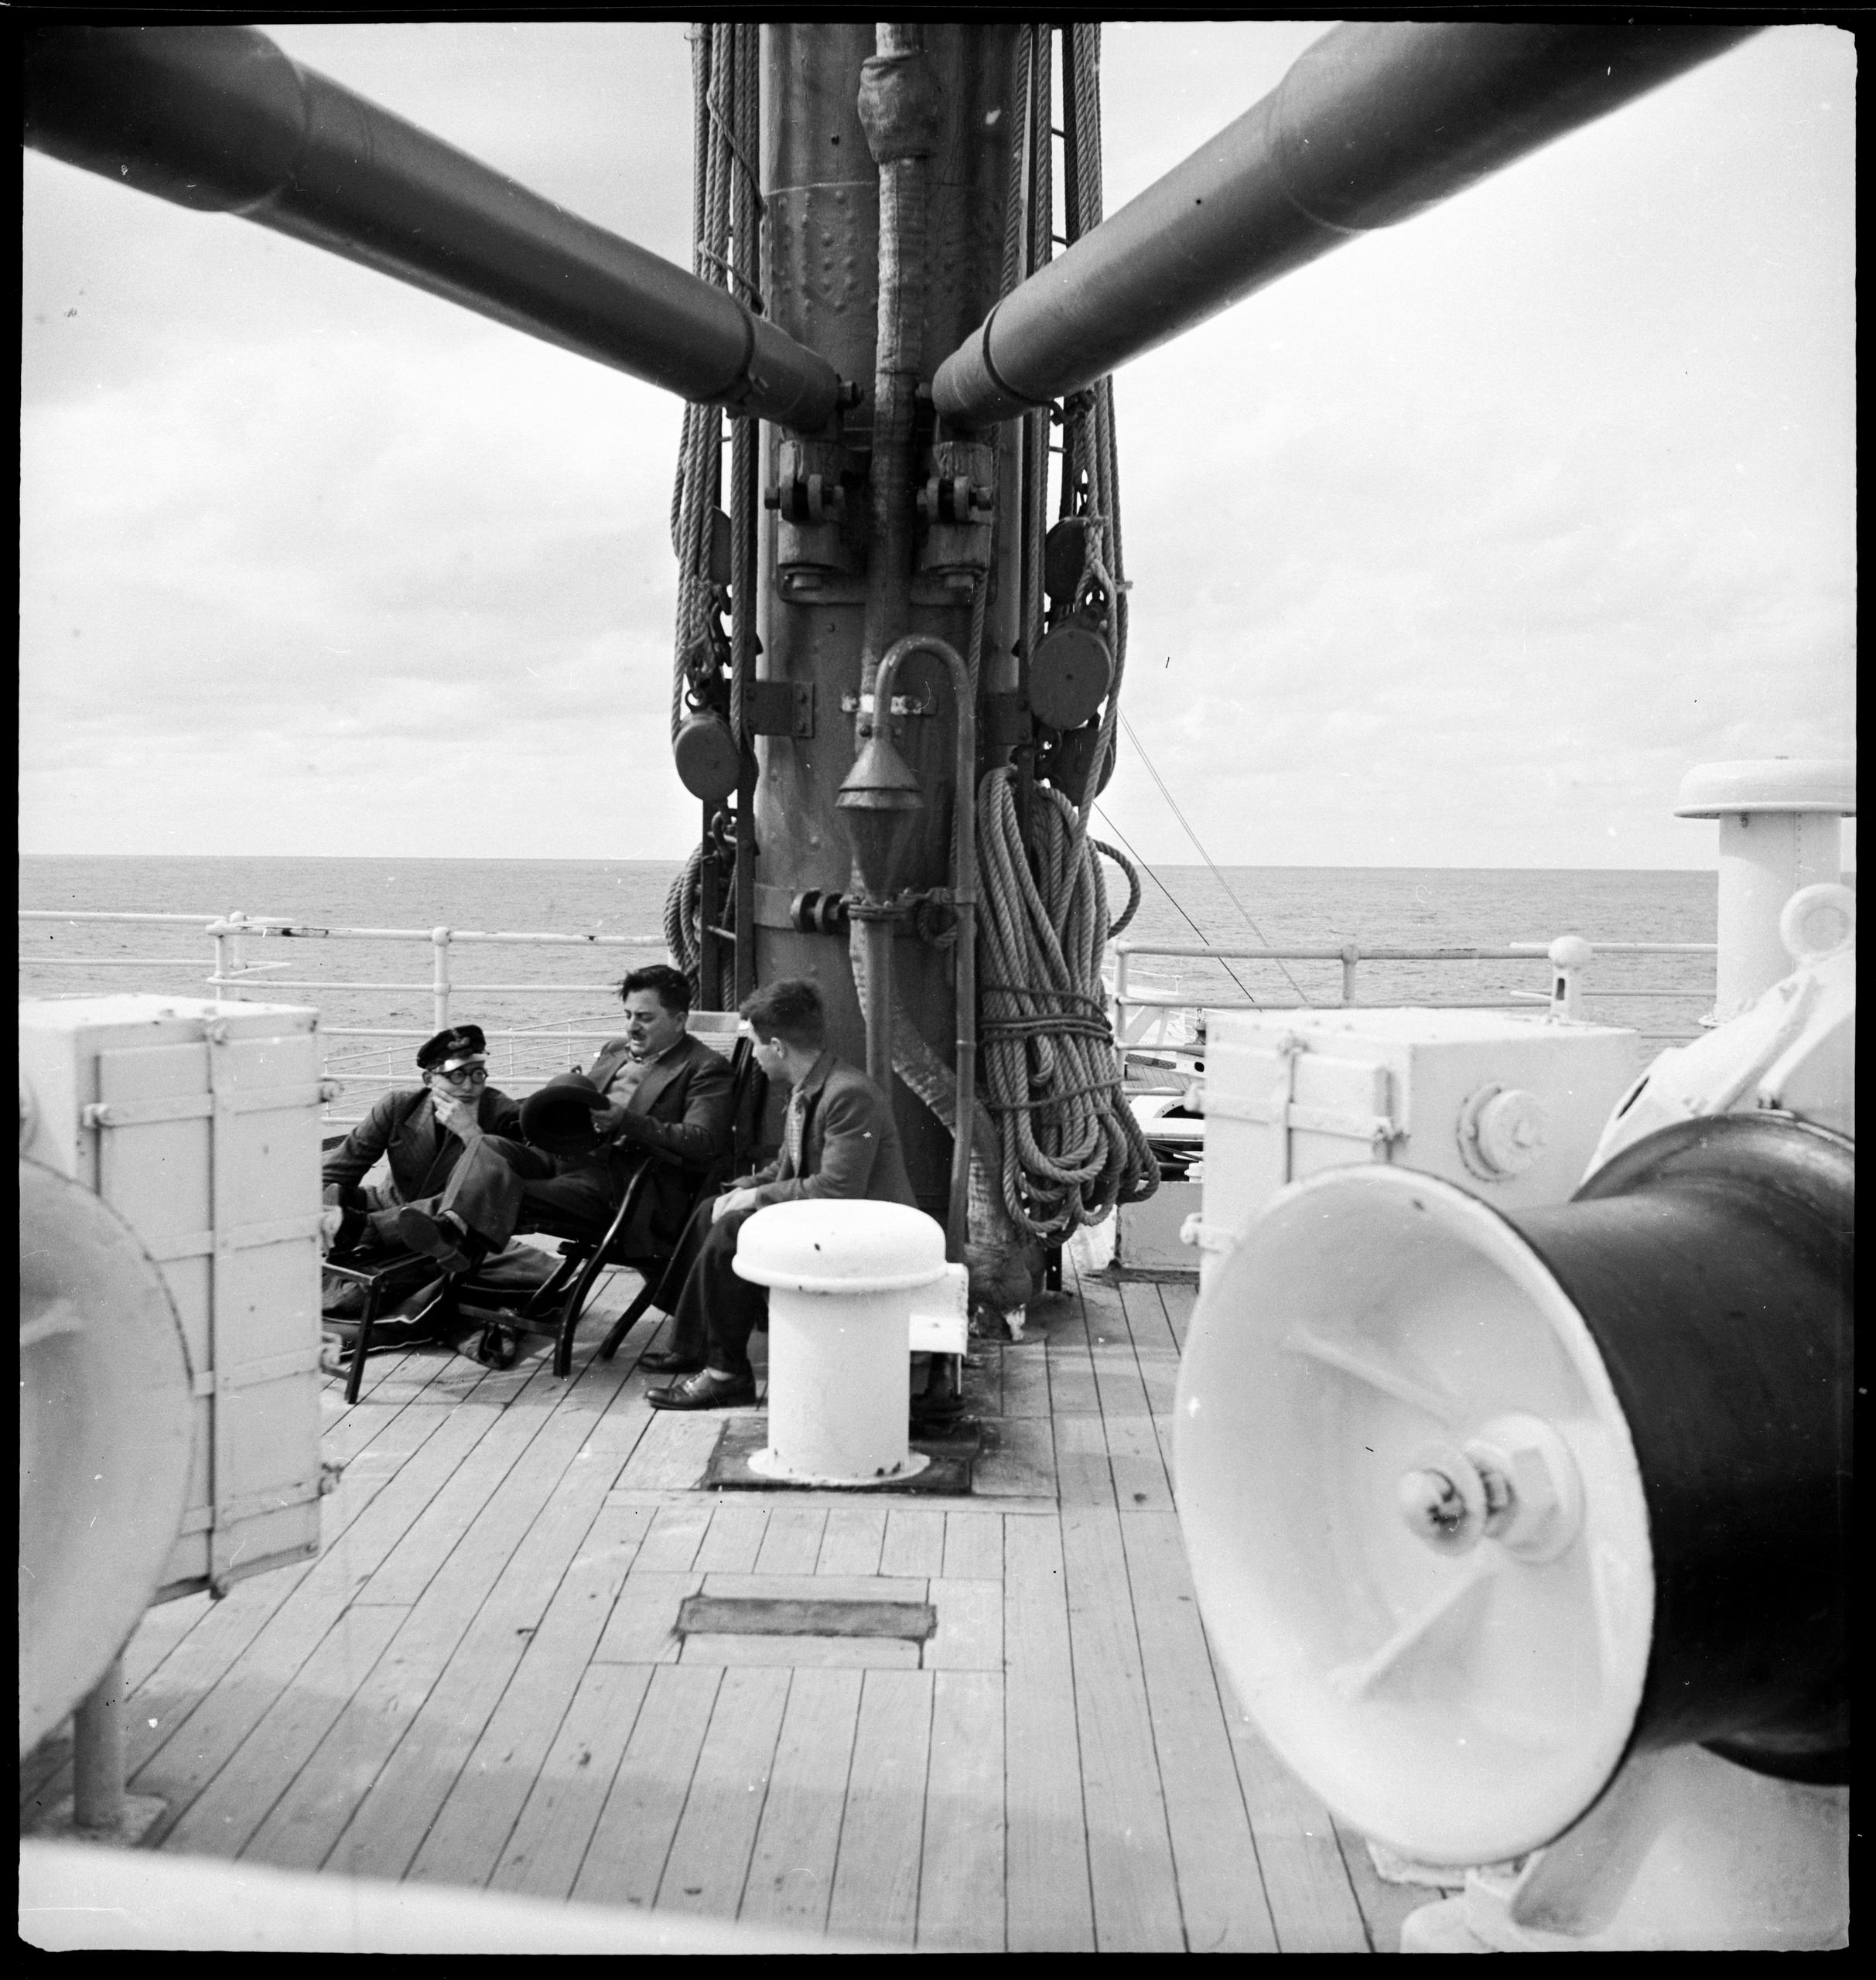 трое мужчин сидят на скамейке на палубе корабля